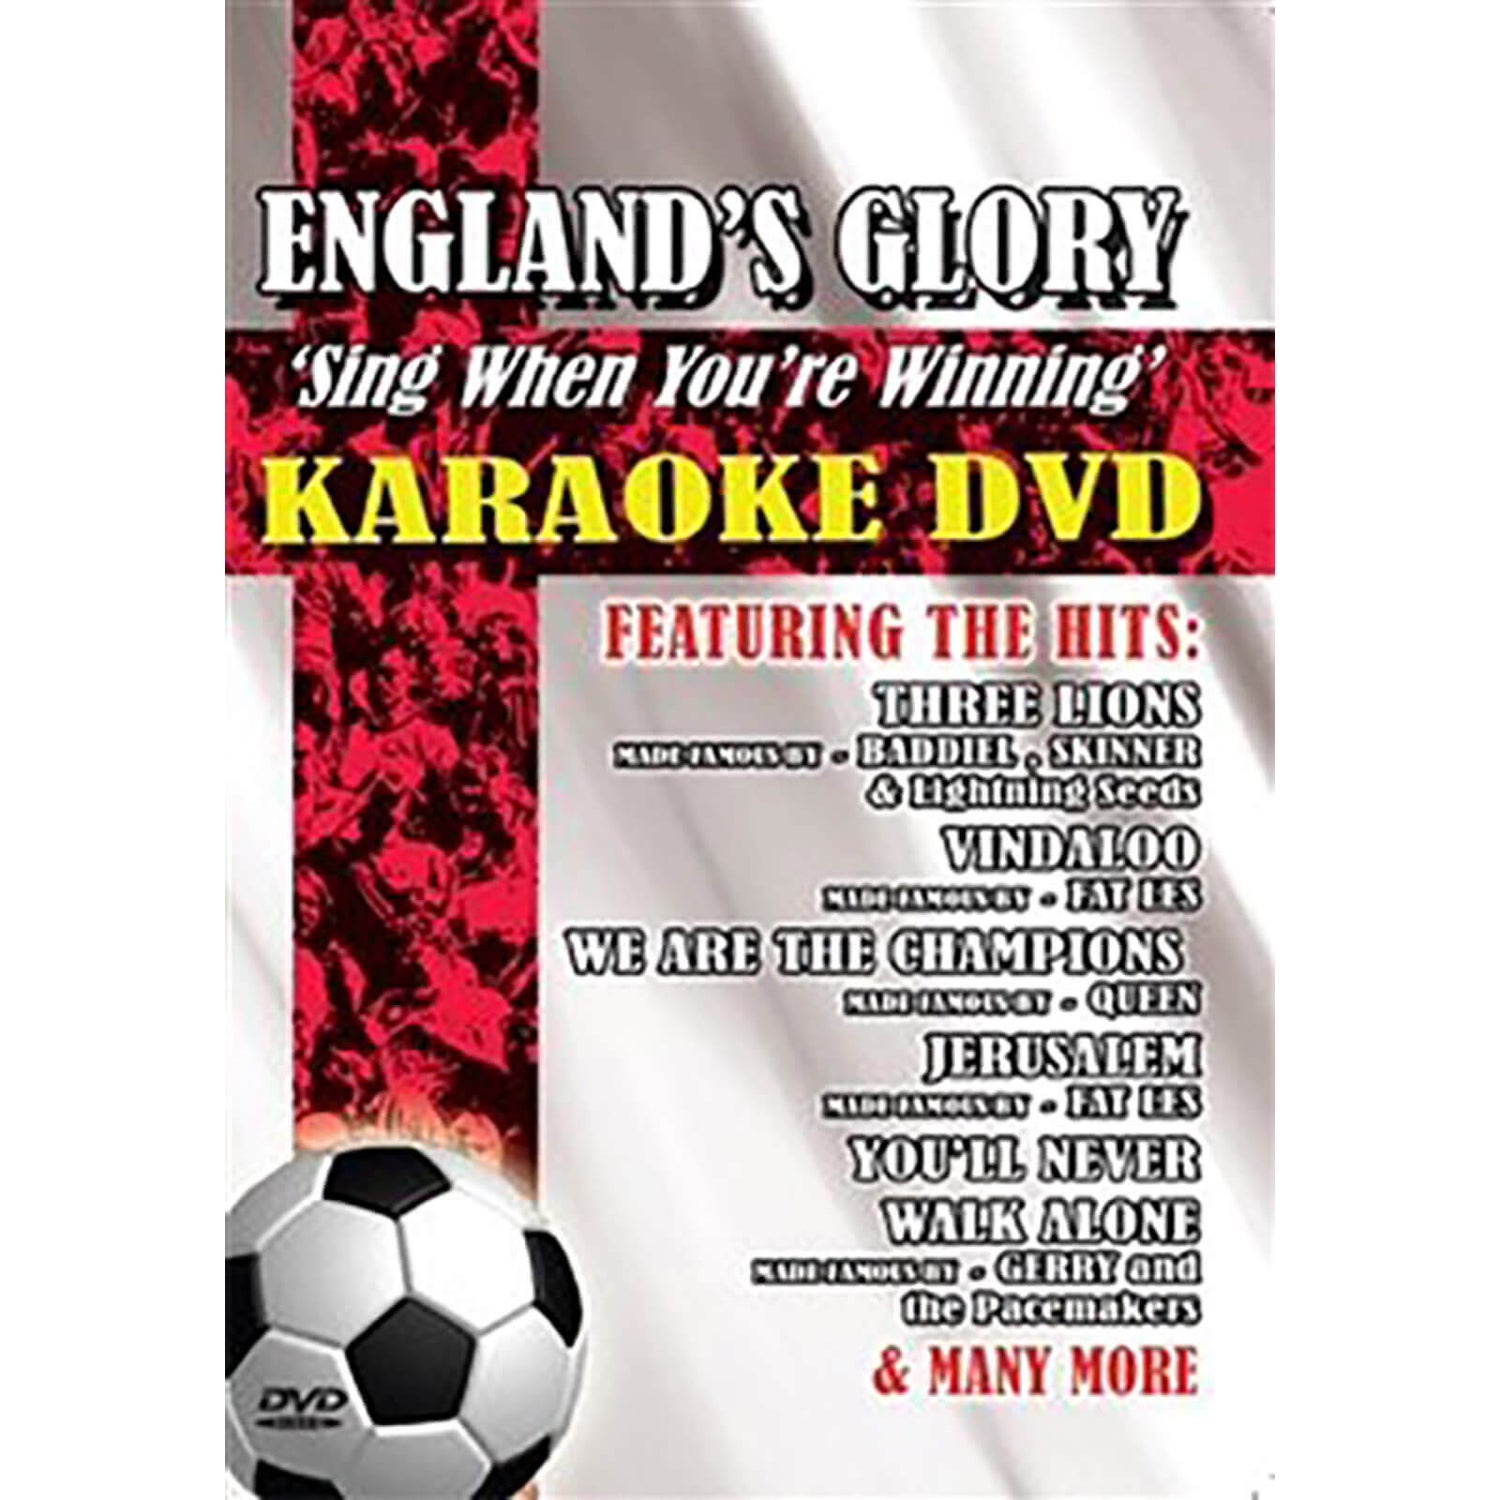 Englands Glory - Football Karaoke